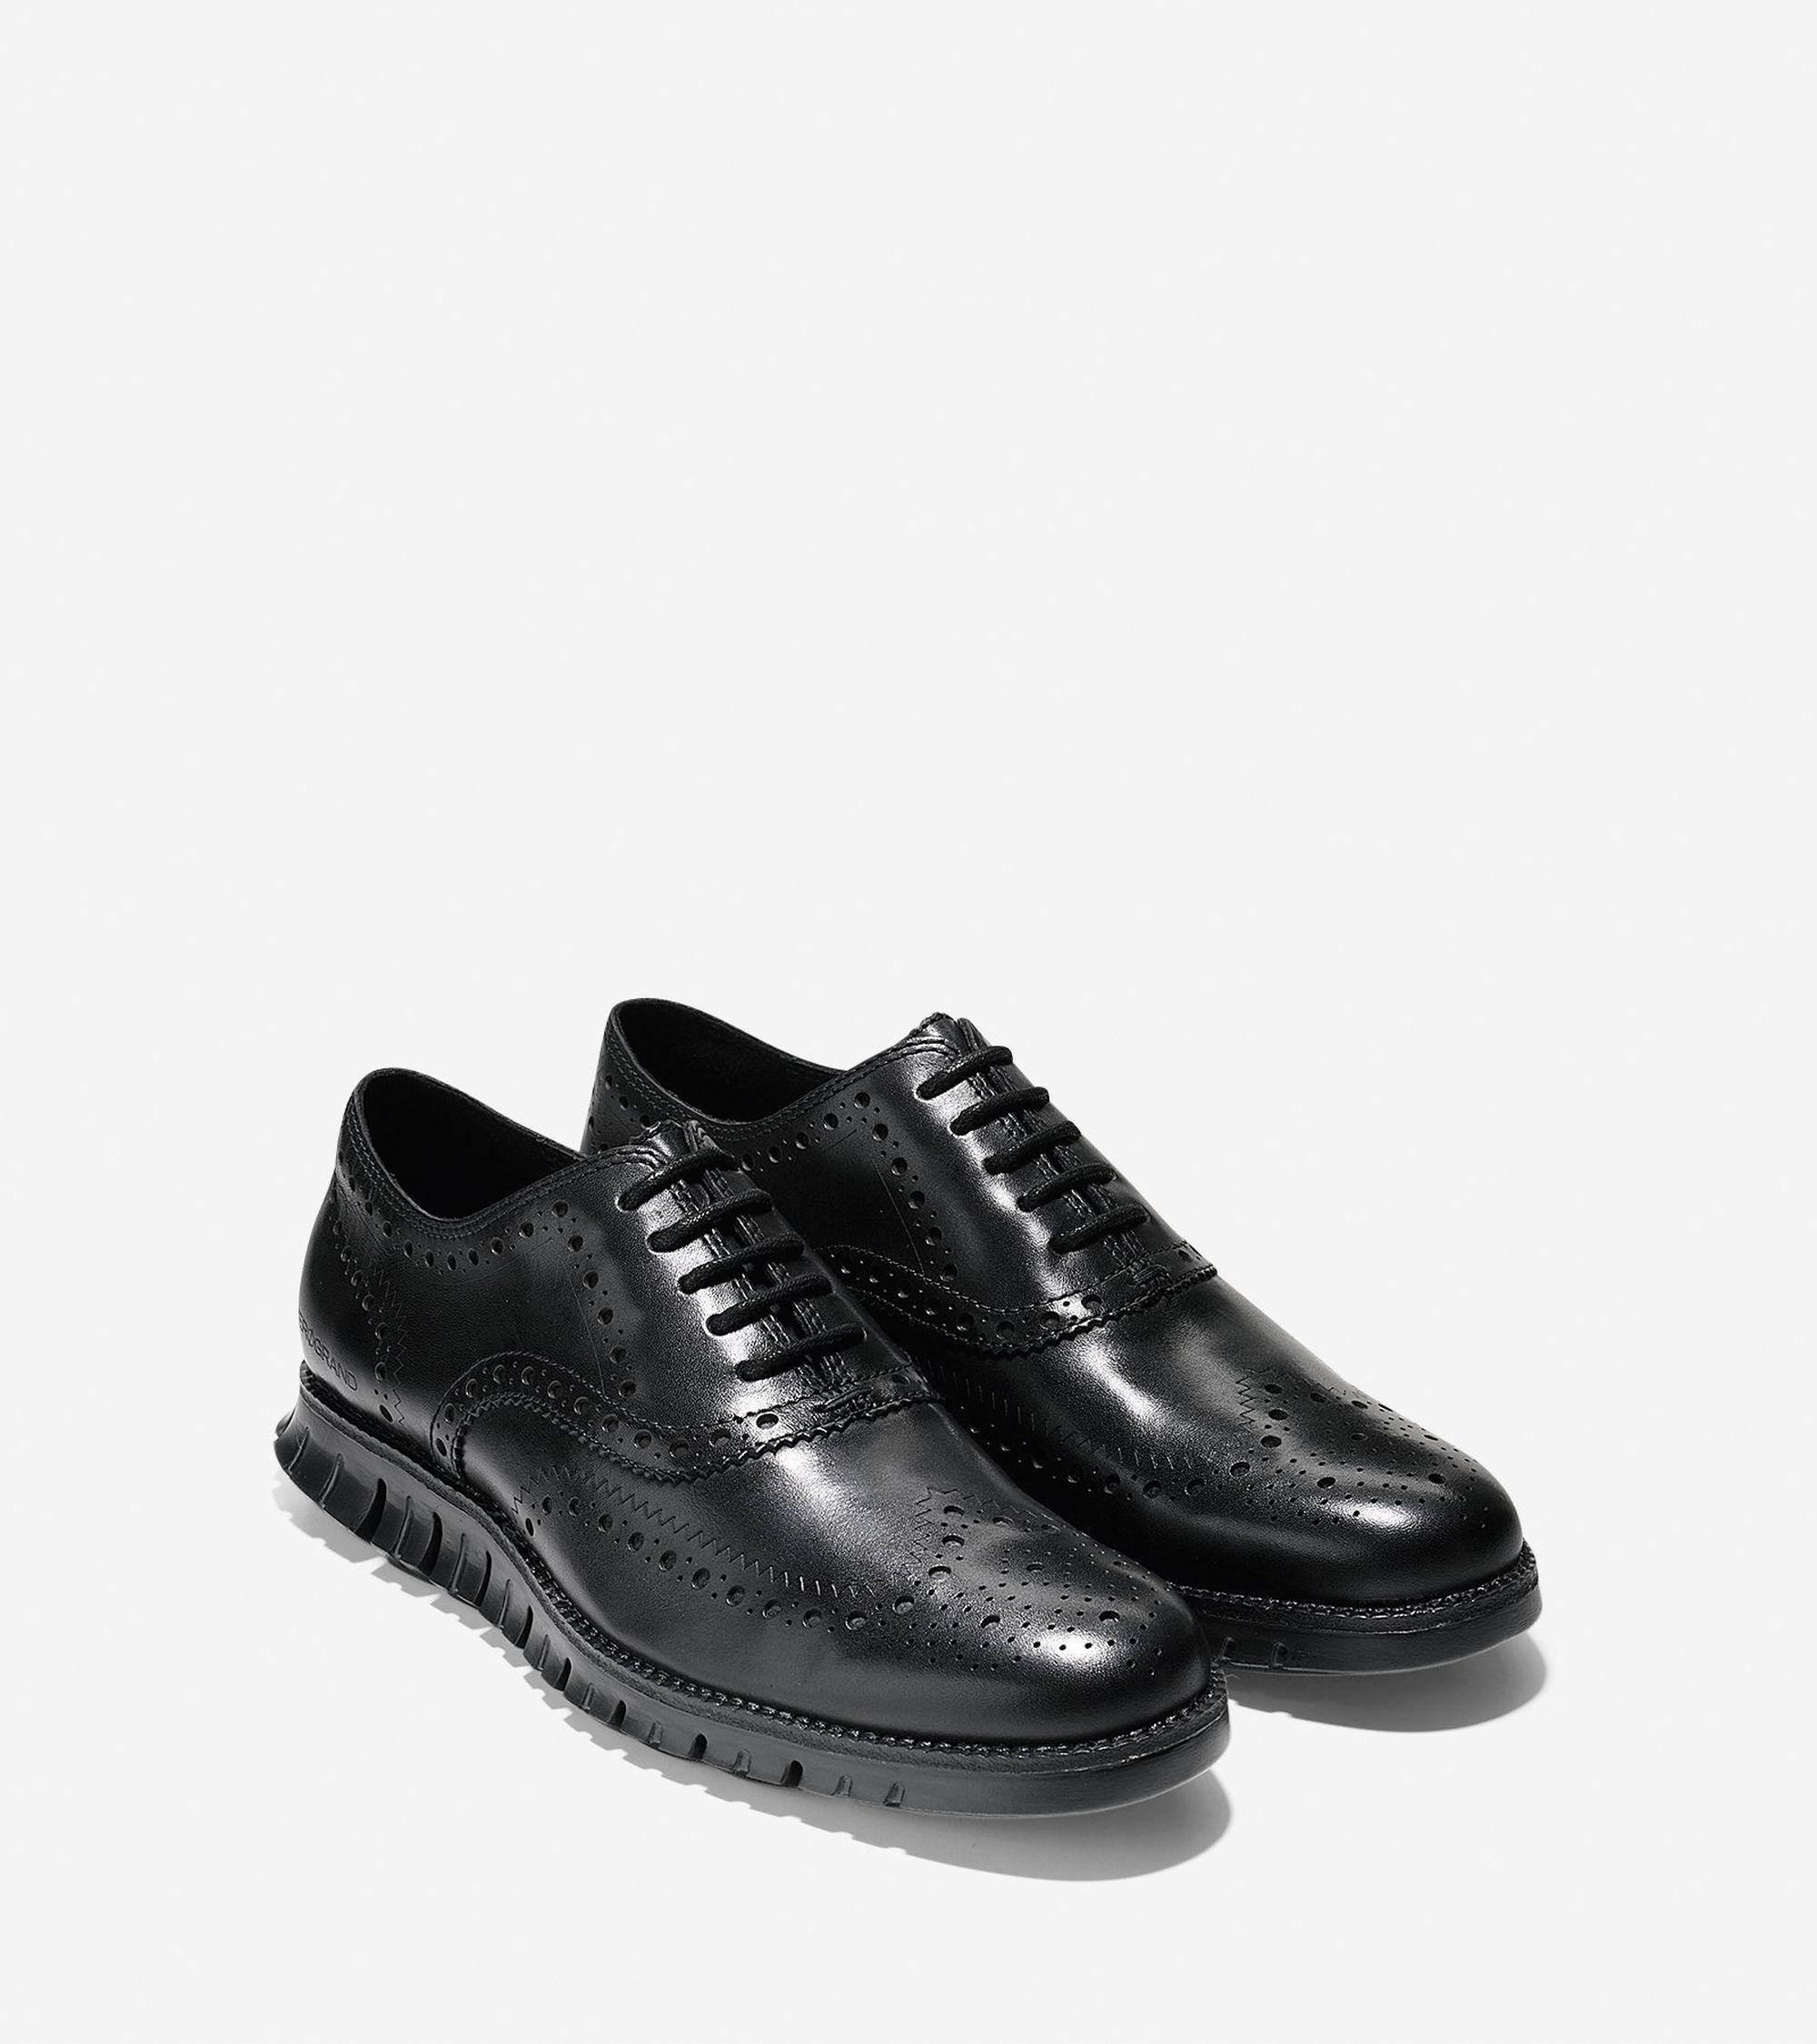 Buy > black cole haan dress shoes > in stock